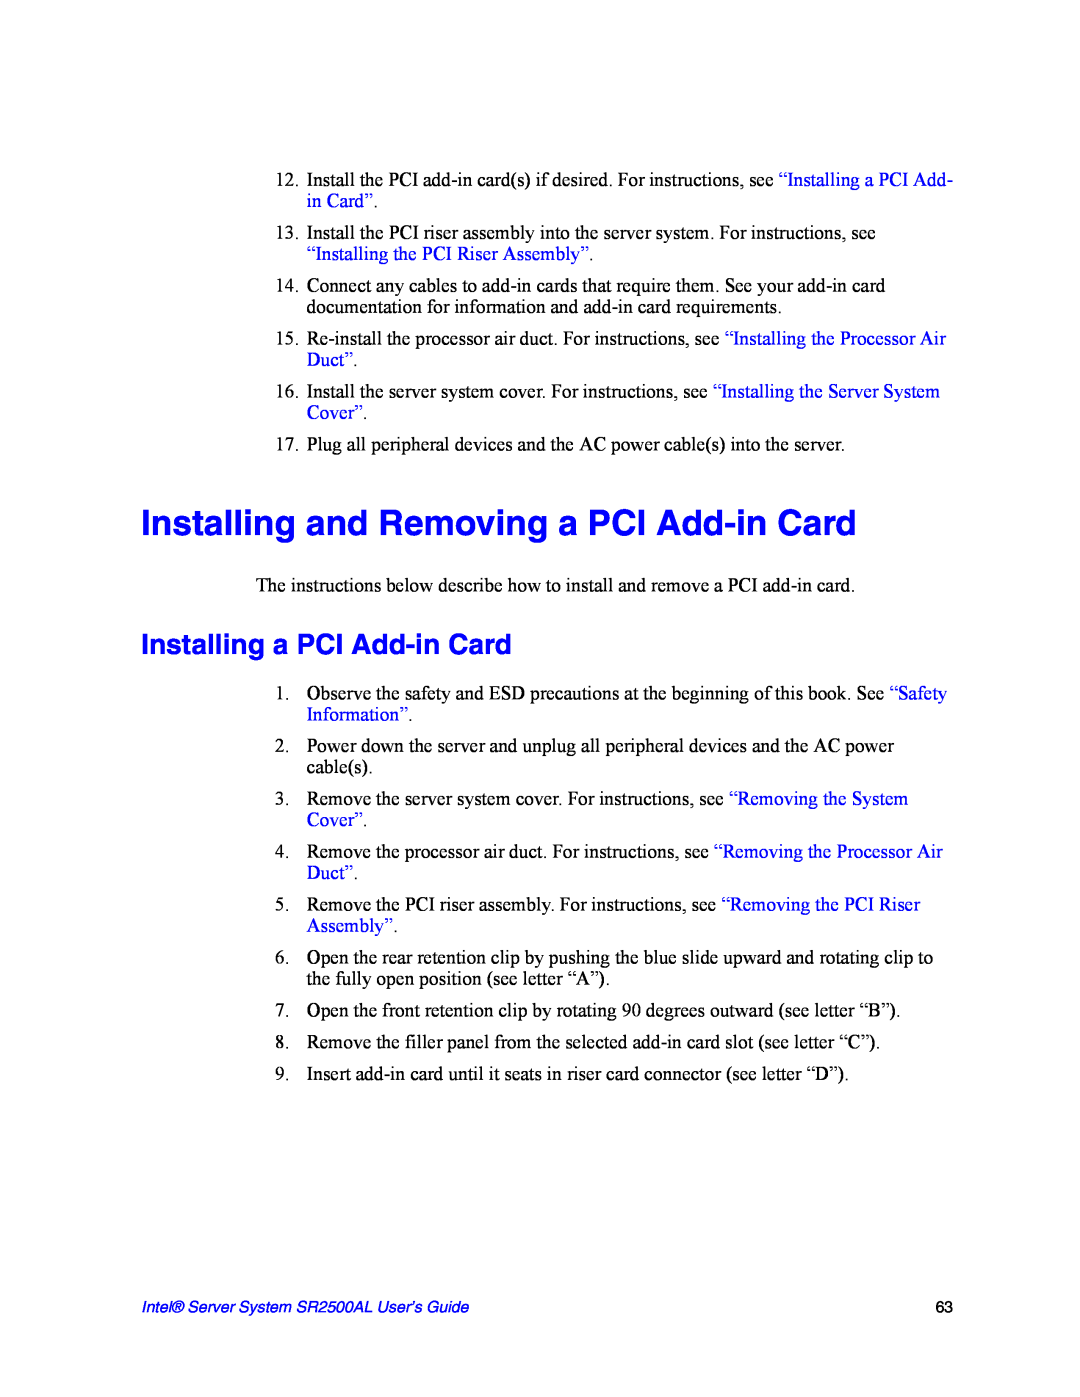 Intel SR2500AL manual Installing and Removing a PCI Add-in Card, Installing a PCI Add-in Card 